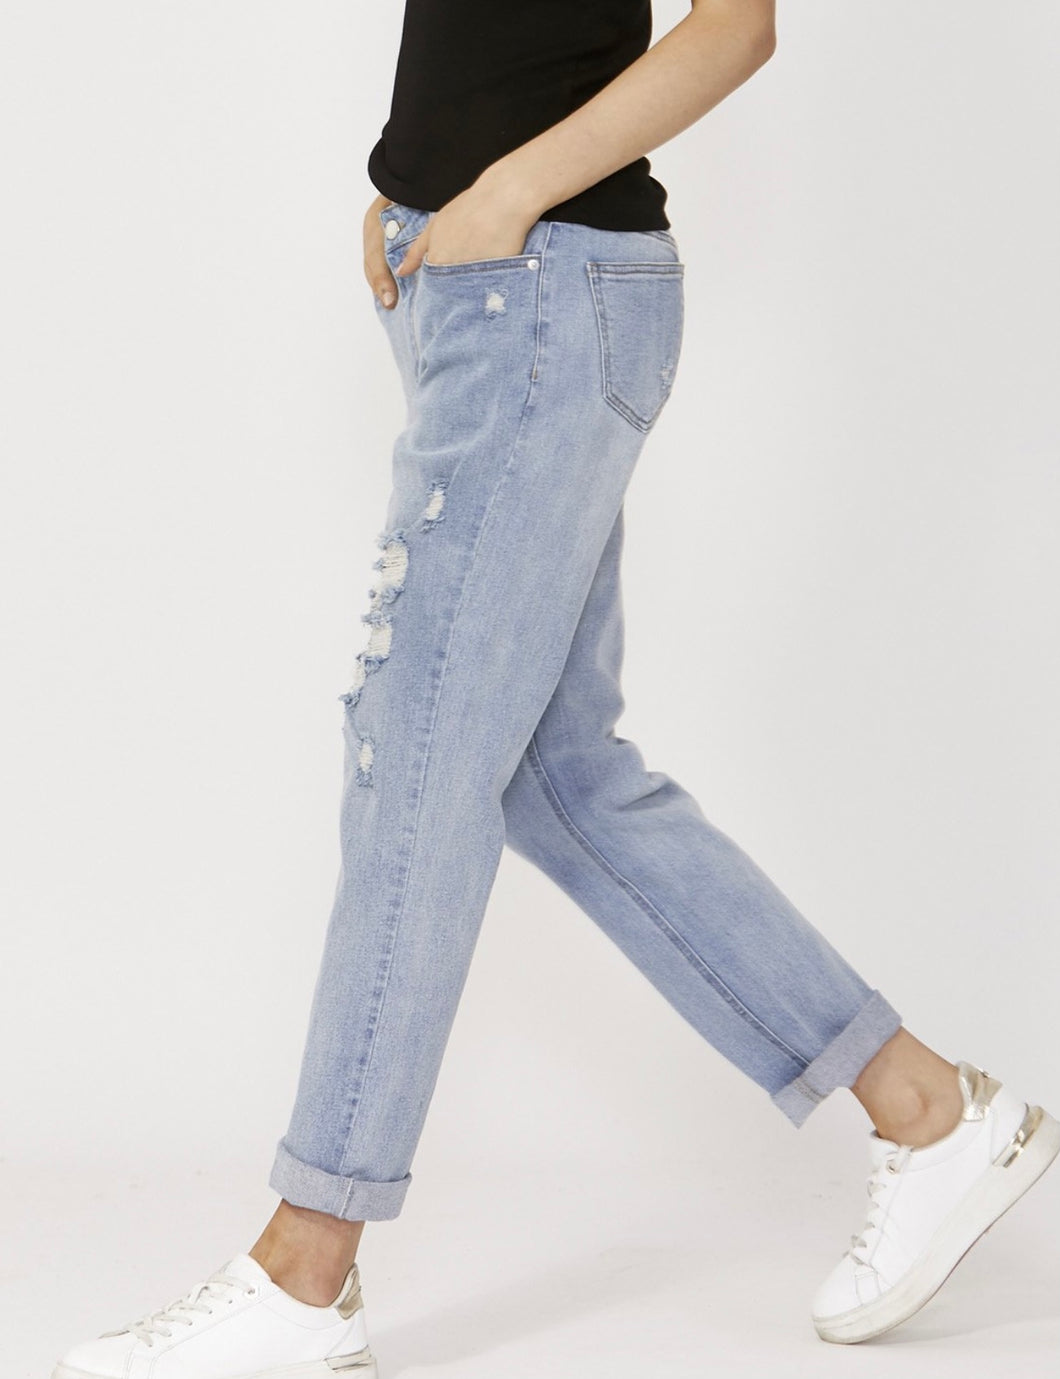 Frida Jeans 16096